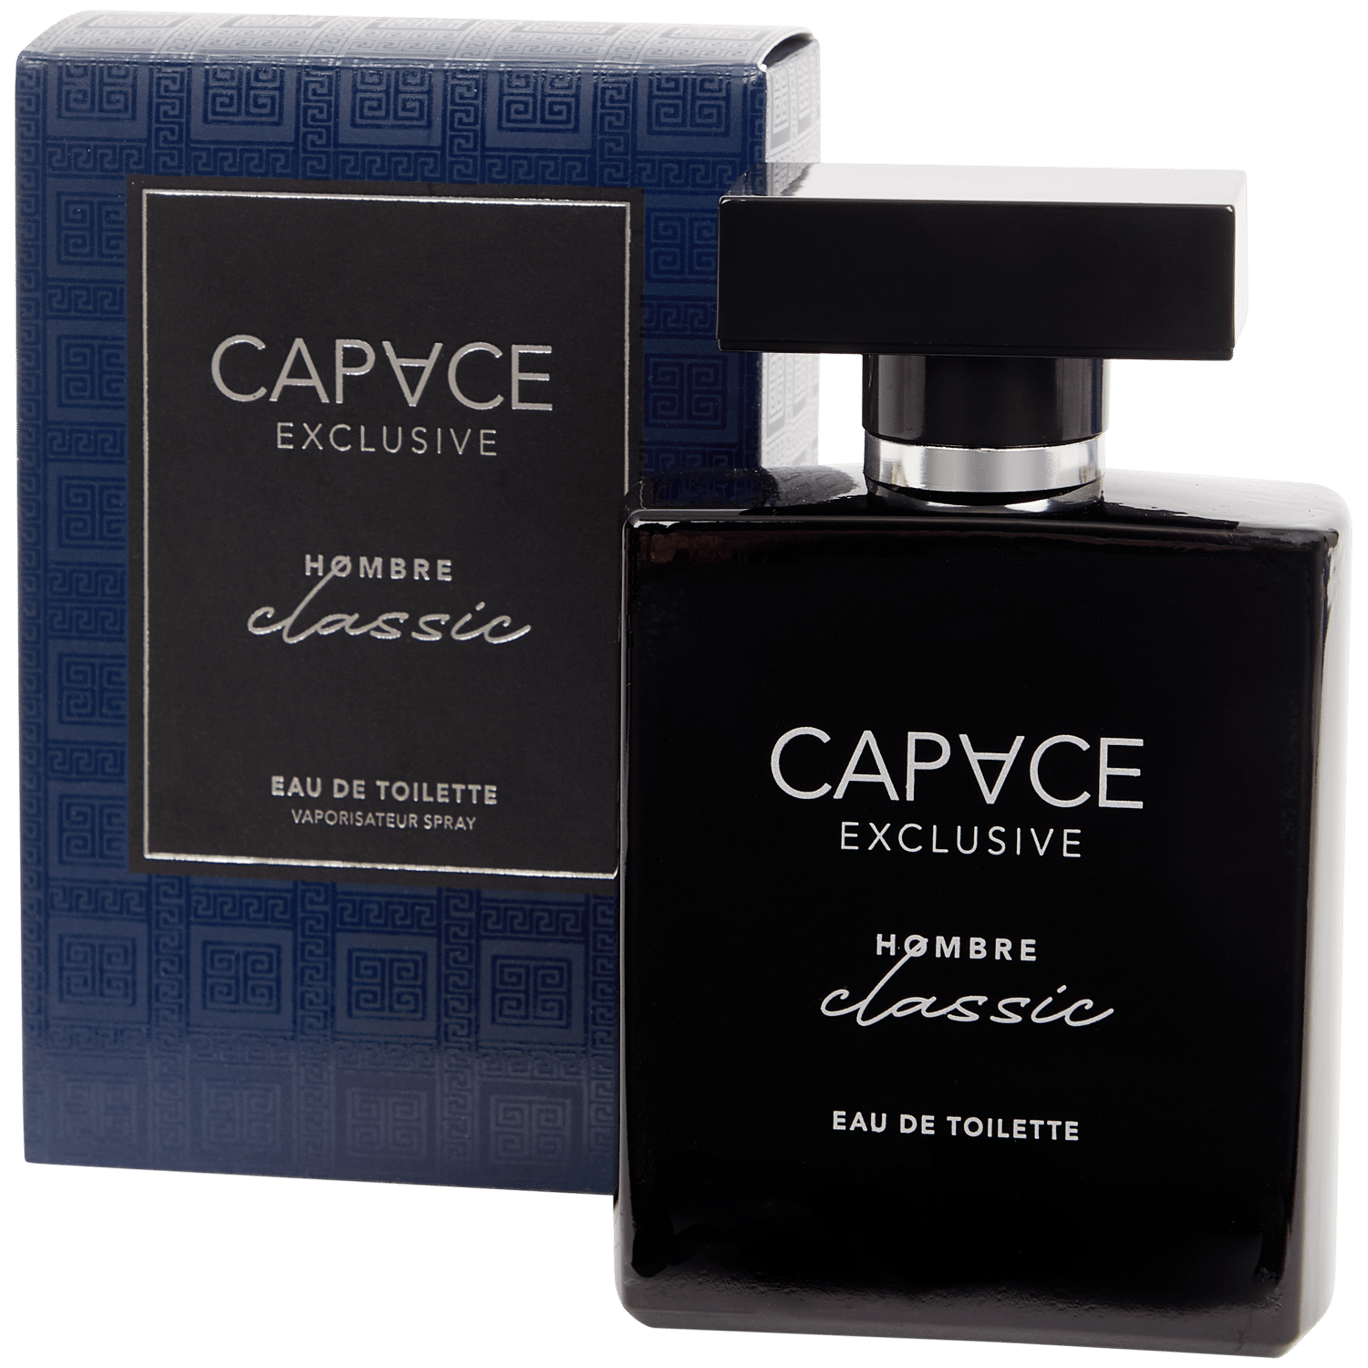 Agua de colonia Capace Exclusive Hombre Classic